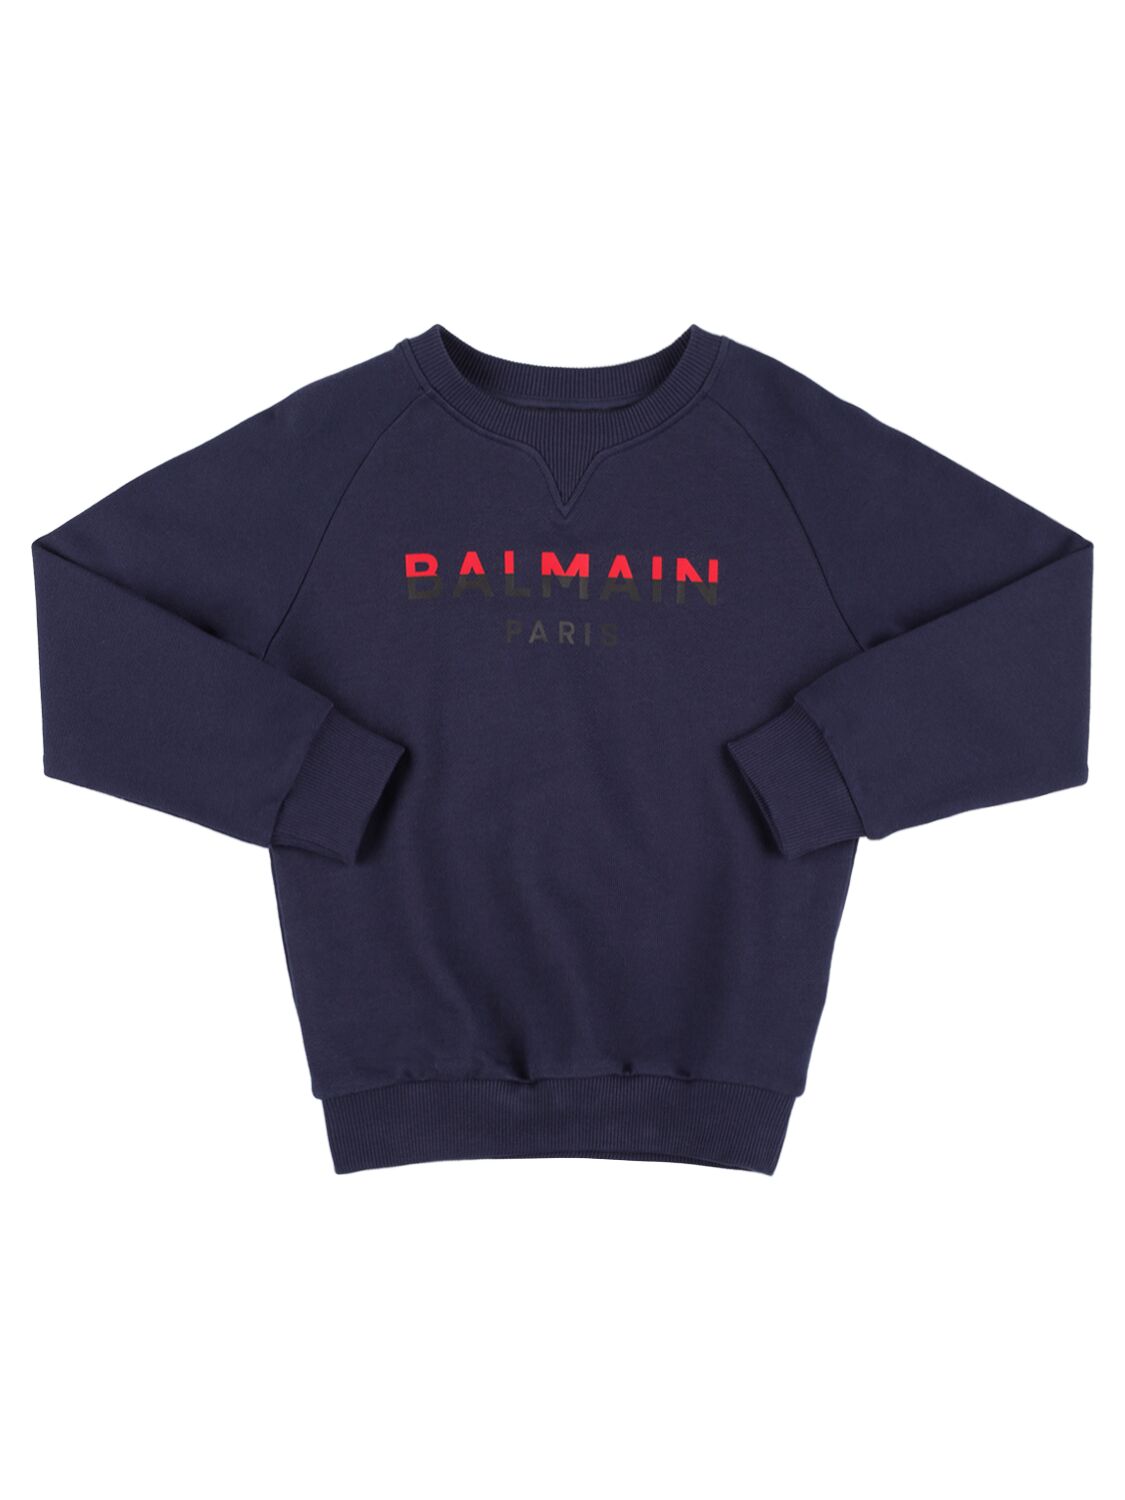 Balmain Kids' Organic Cotton Sweatshirt In Blue